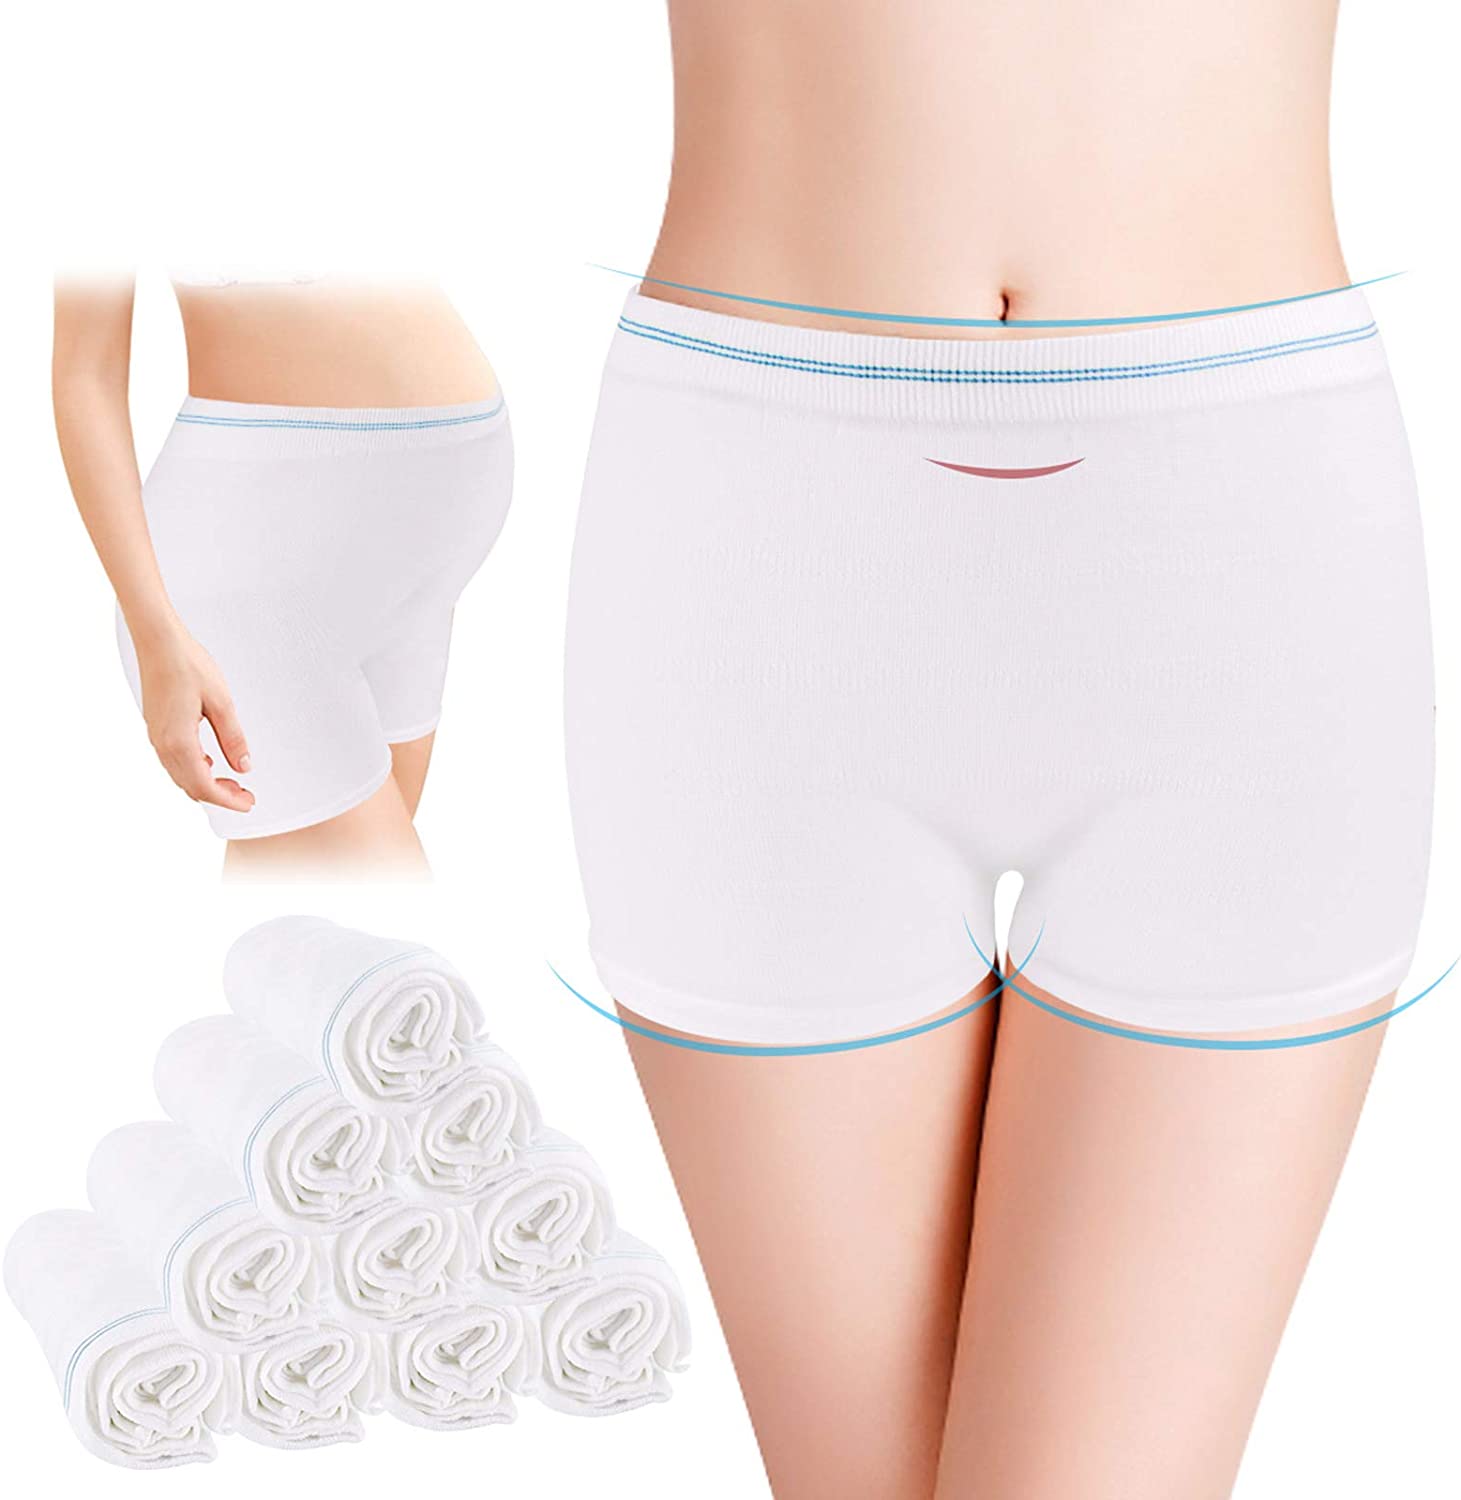 Mesh Panties Postpartum, Disposable Hospital Mesh Postpartum Underwear